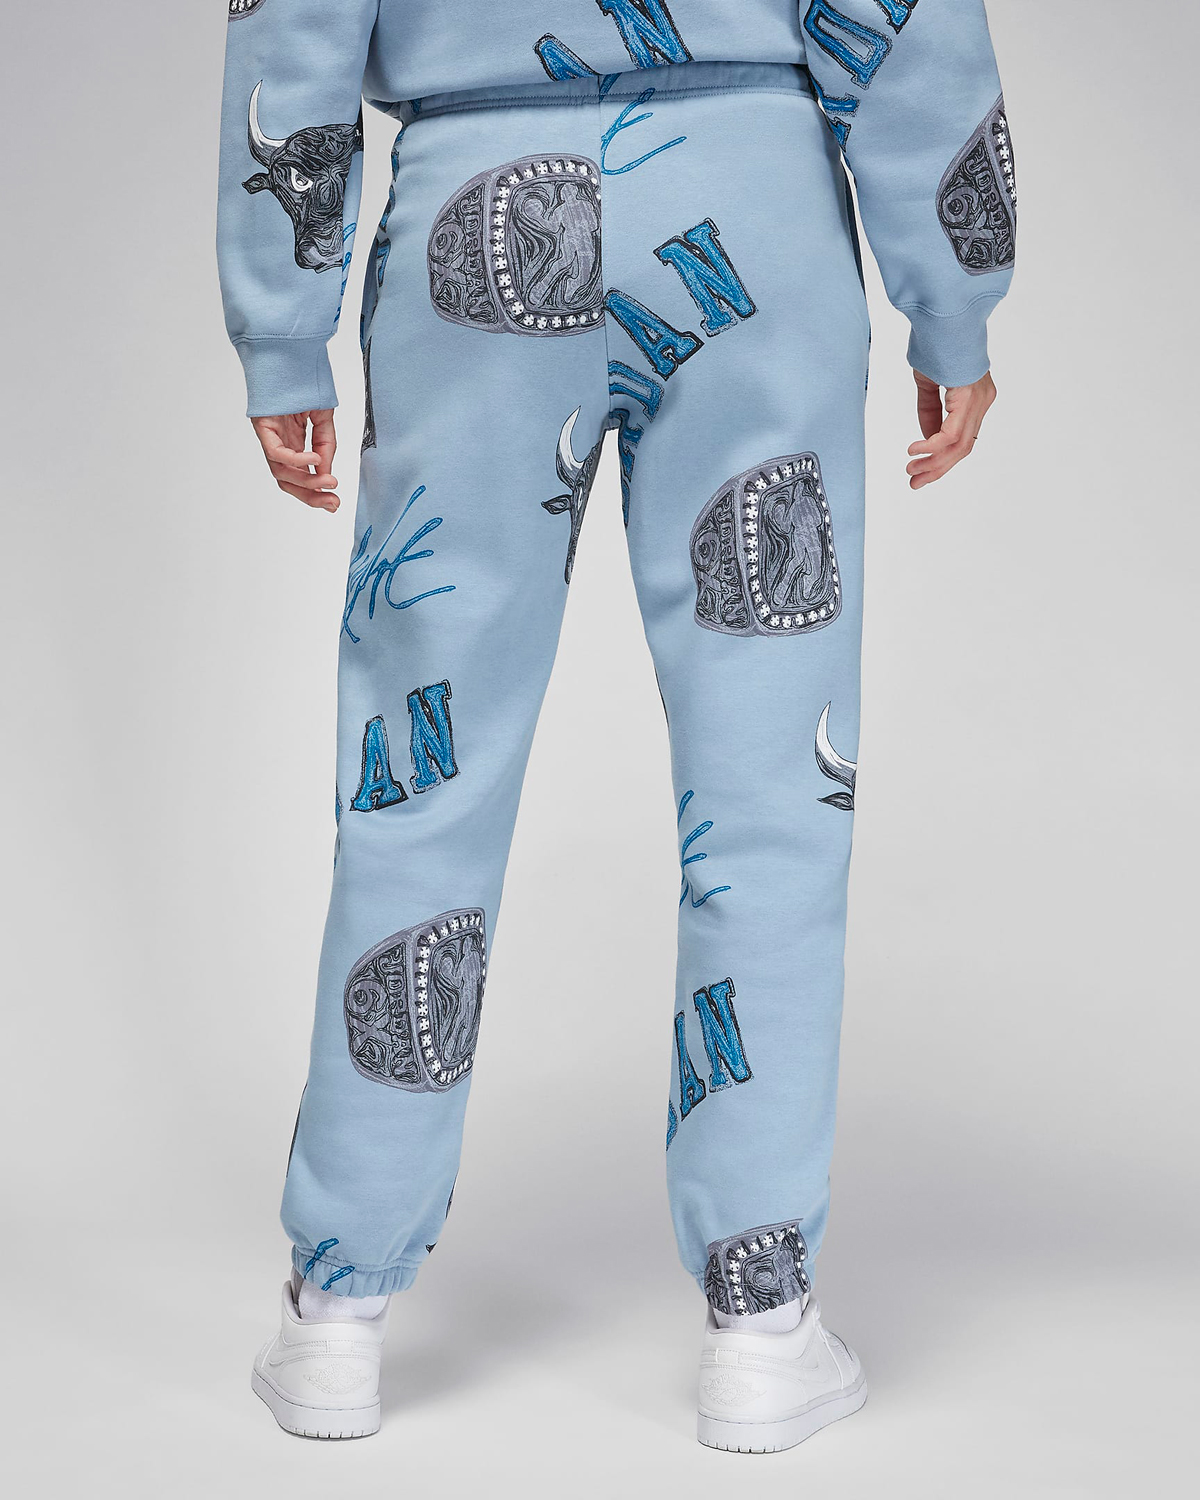 Jordan-Brooklyn-Fleece-Womens-Pants-Blue-Grey-2